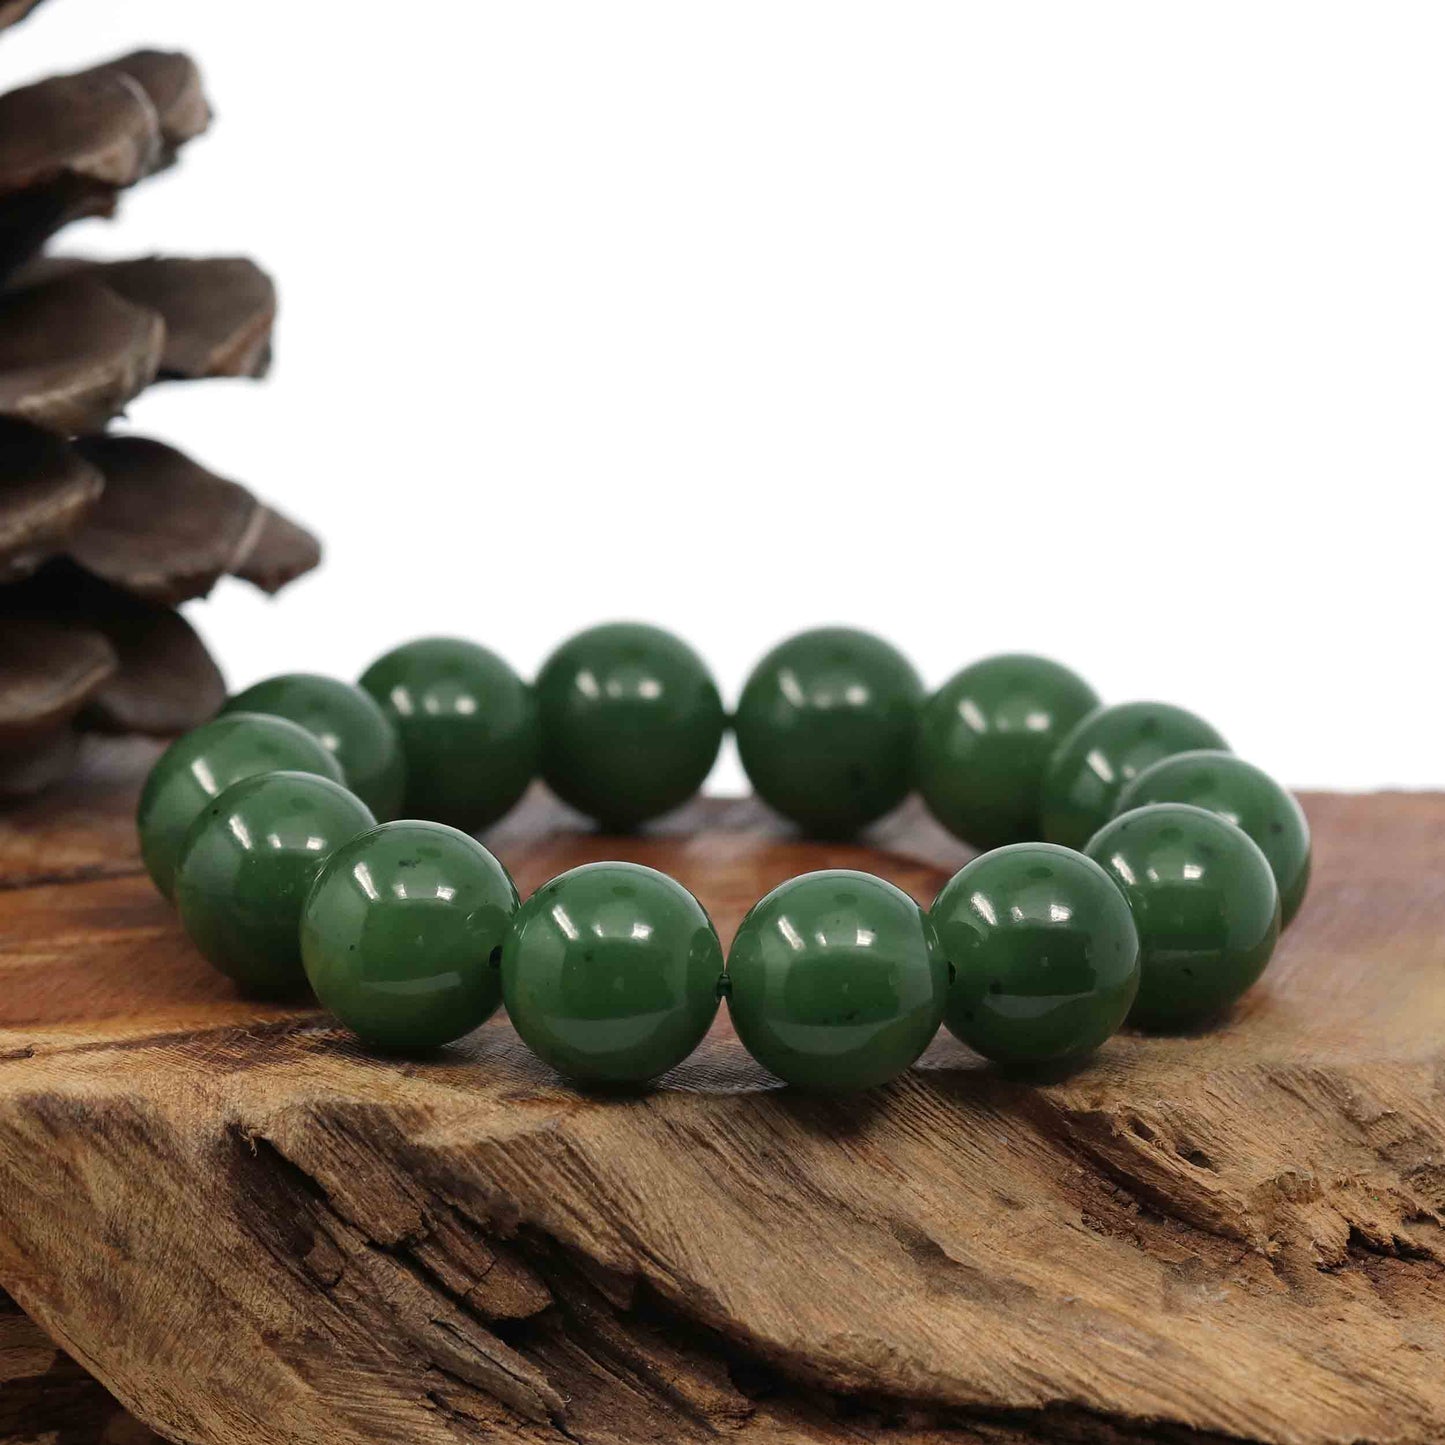 High RealJade® Co. Genuine Green Nephrite Jade Large Round Beads Men's Bracelet( 14.8mm )